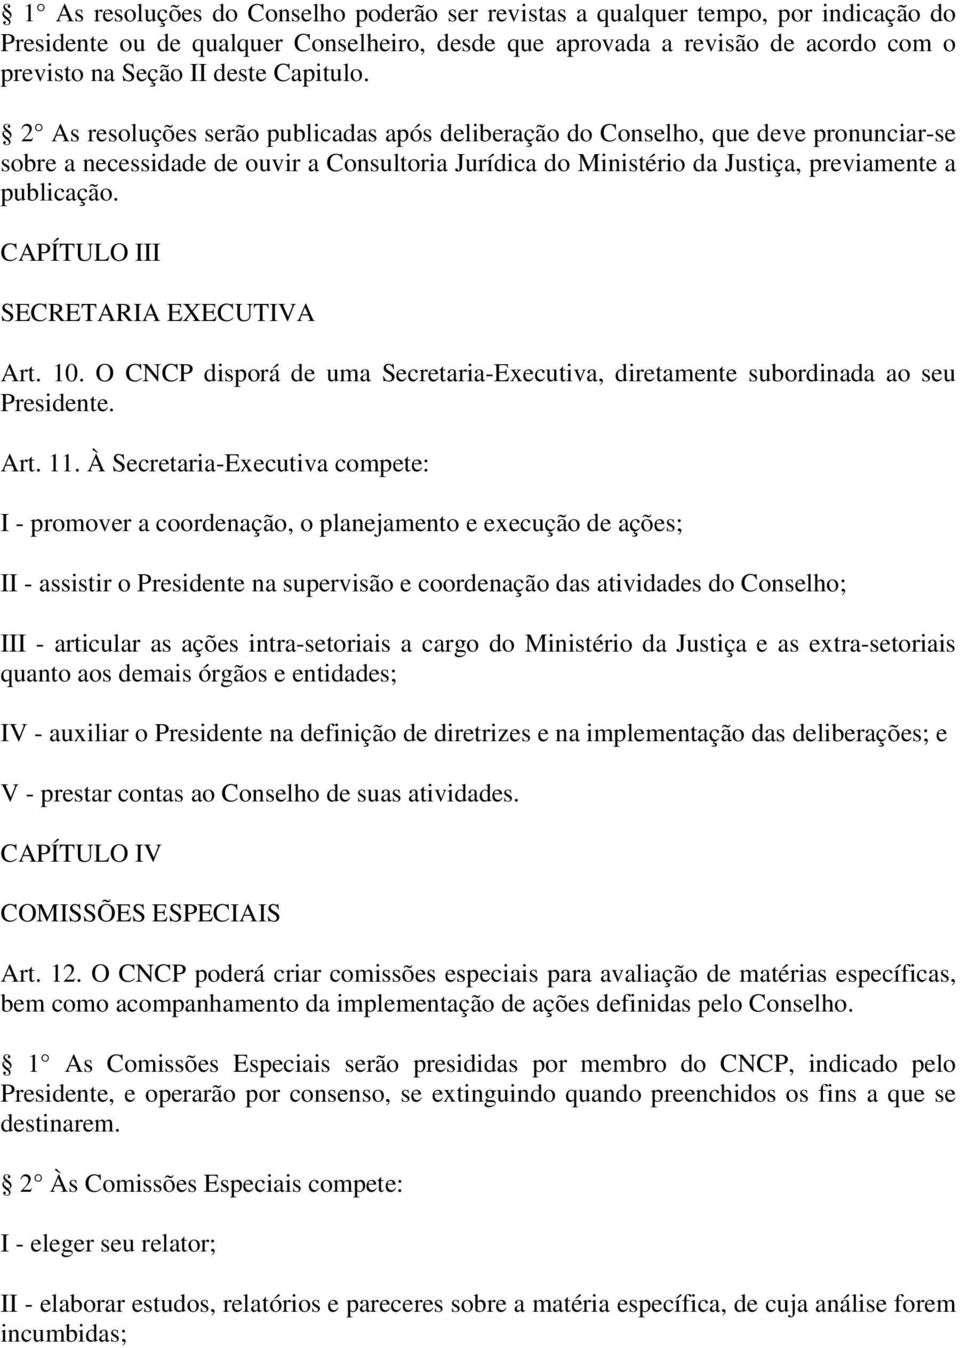 CAPÍTULO III SECRETARIA EXECUTIVA Art. 10. O CNCP disporá de uma Secretaria-Executiva, diretamente subordinada ao seu Presidente. Art. 11.